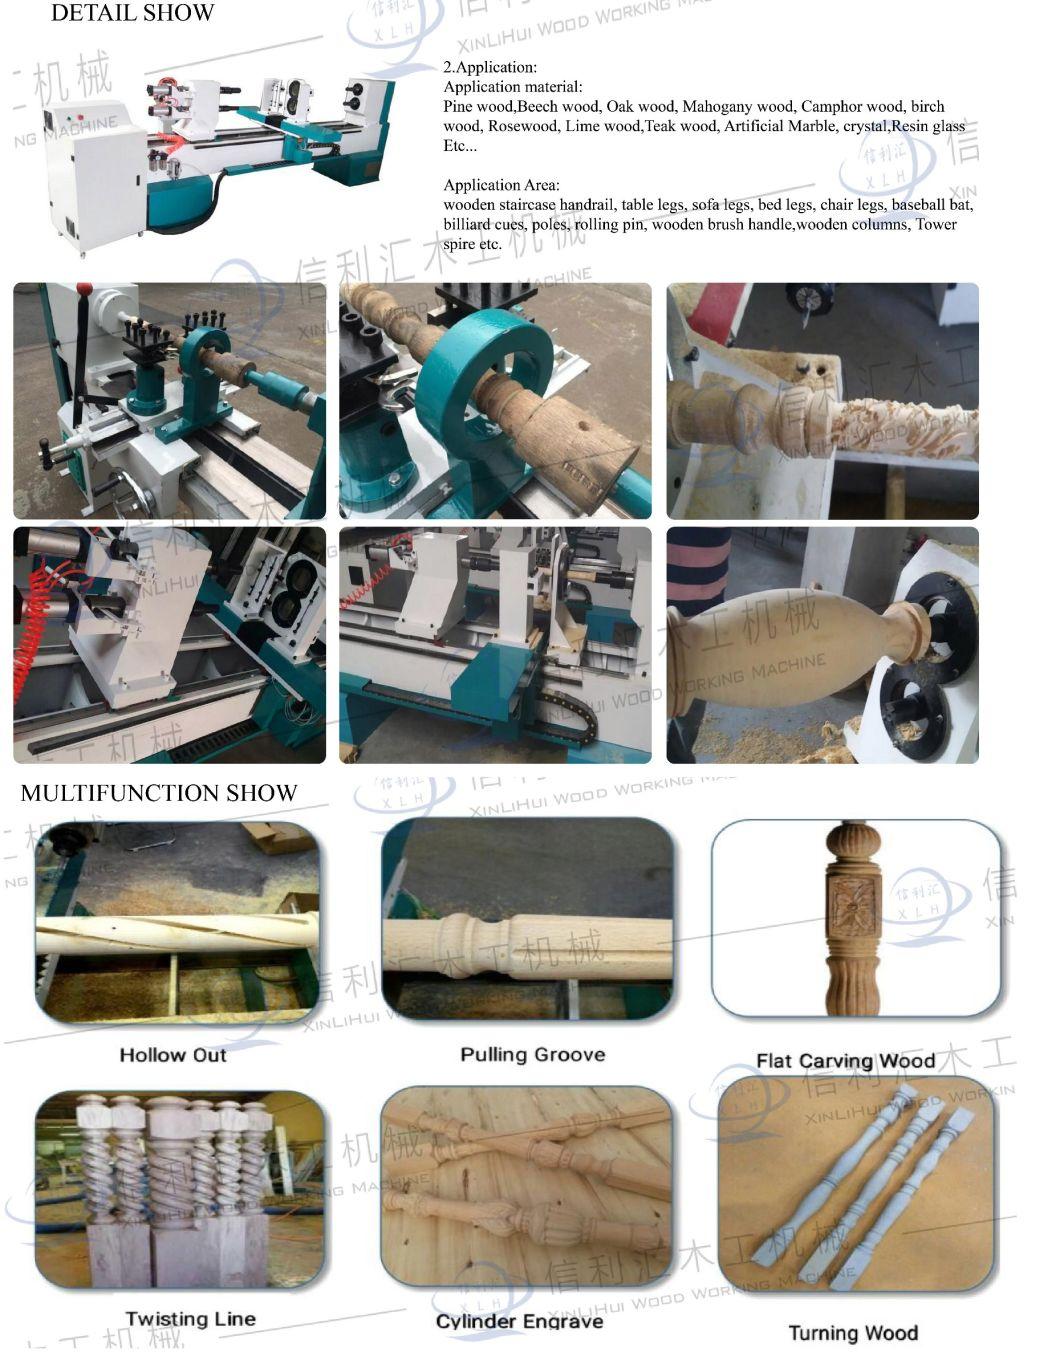 China′s′ Automatic CNC Wood Lathe Wood Working Turning Lathe CNC Wood Lathe Machine. for Curve & Decorative Legs Wood Working Machine Suppliars in Nepal